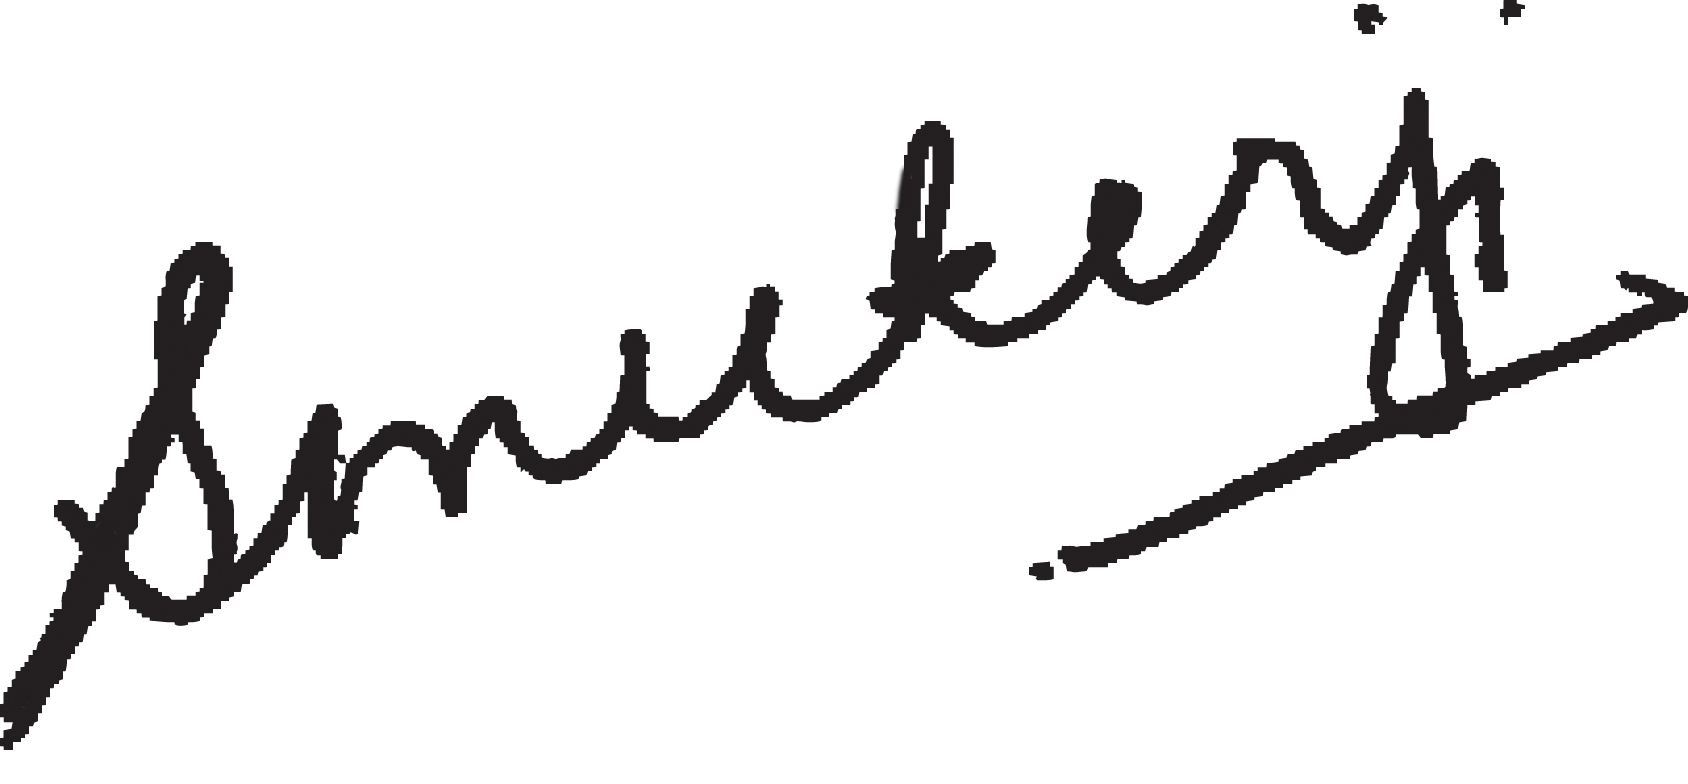 Shobhini Mukerji's signature